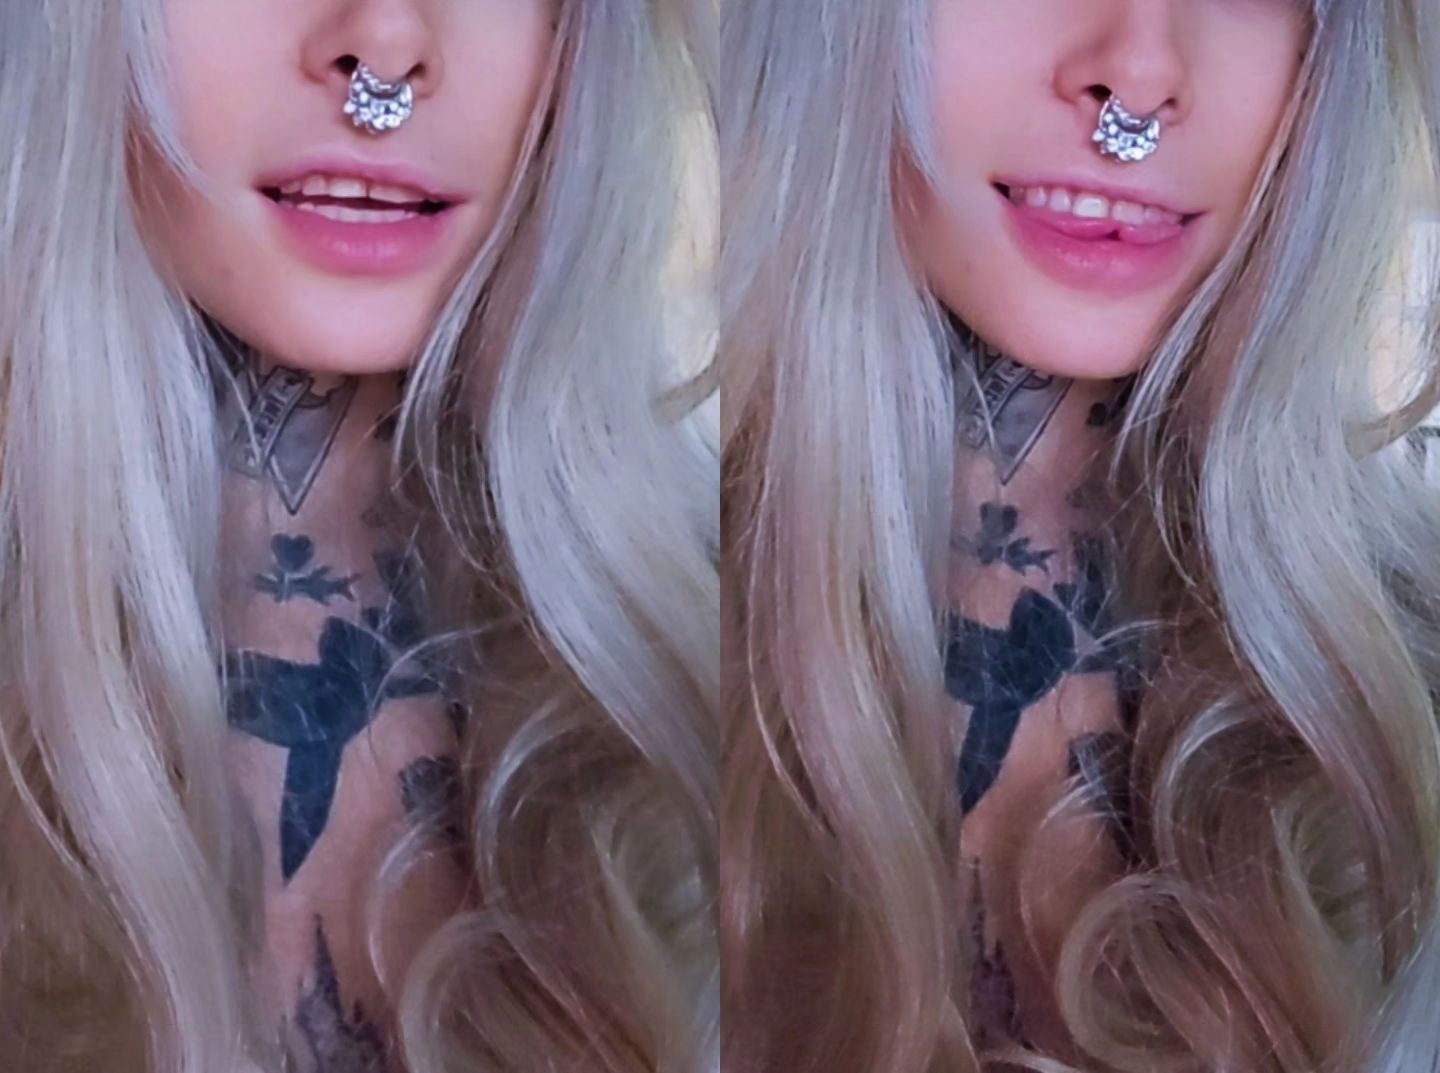 Do you like blondes? 🖤
#trans #transgirls #transgender #mtf #maletofemale  #girlswithtattoos #tattoos #alternative #altgirl #viral #trend #reels #explorepage #boytogirl #inkedgirls #facetattoo #emo #egirl #metalhead #metalgirl #tattooedgirls #blonde #blondehair #barbie